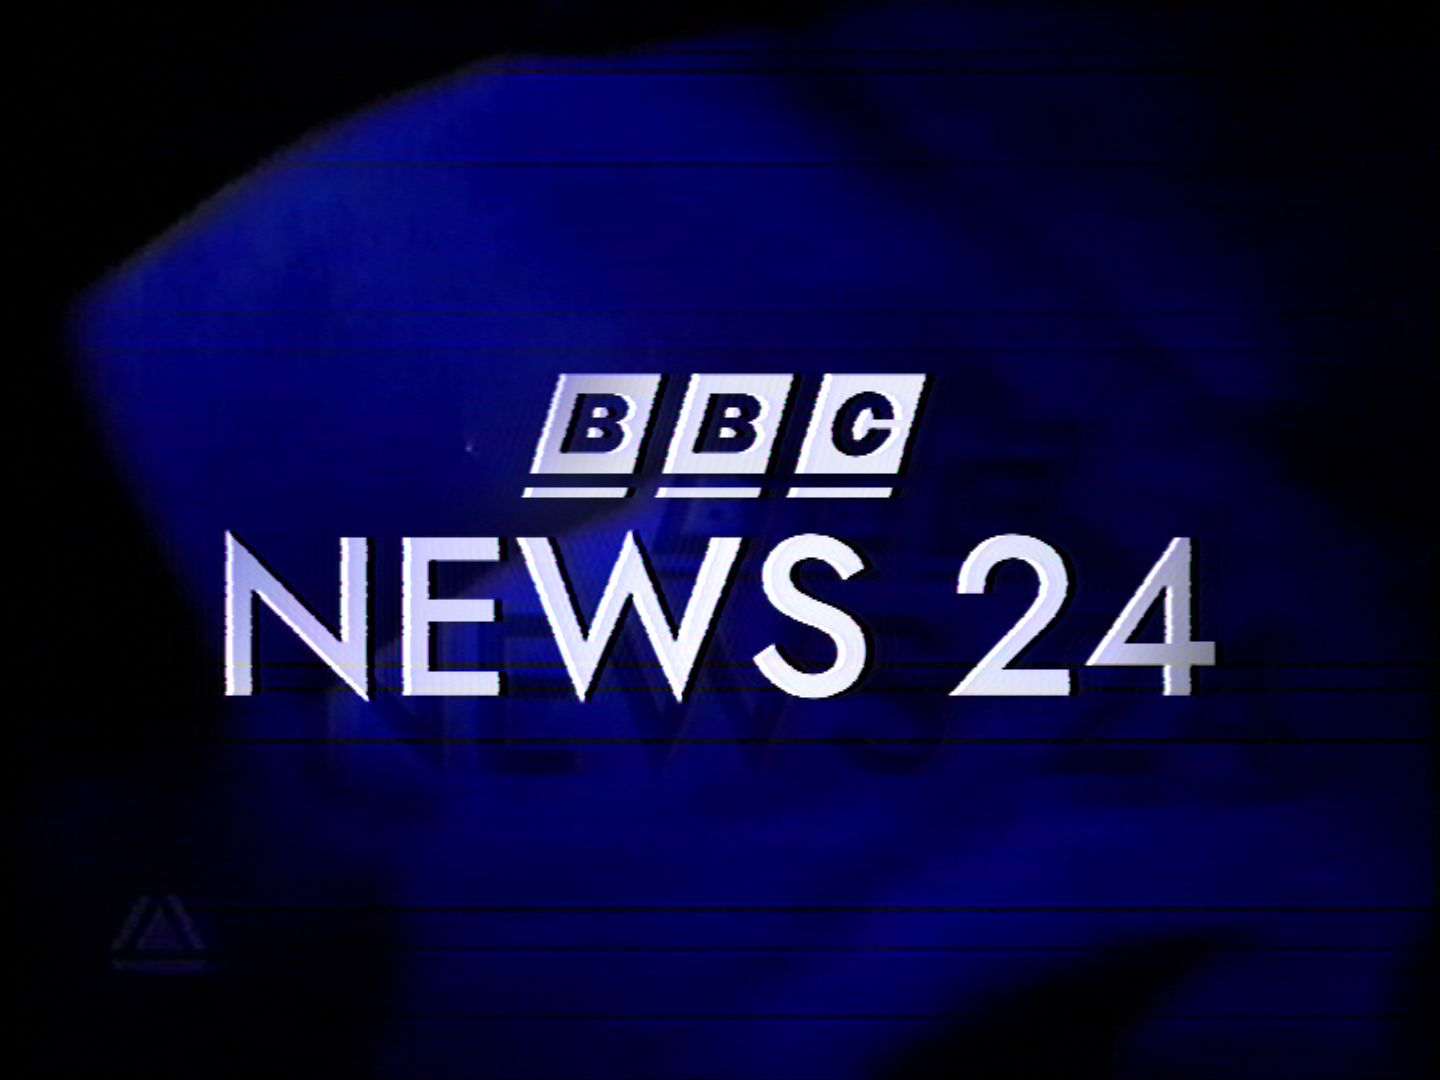 BBC News 24 (1995)